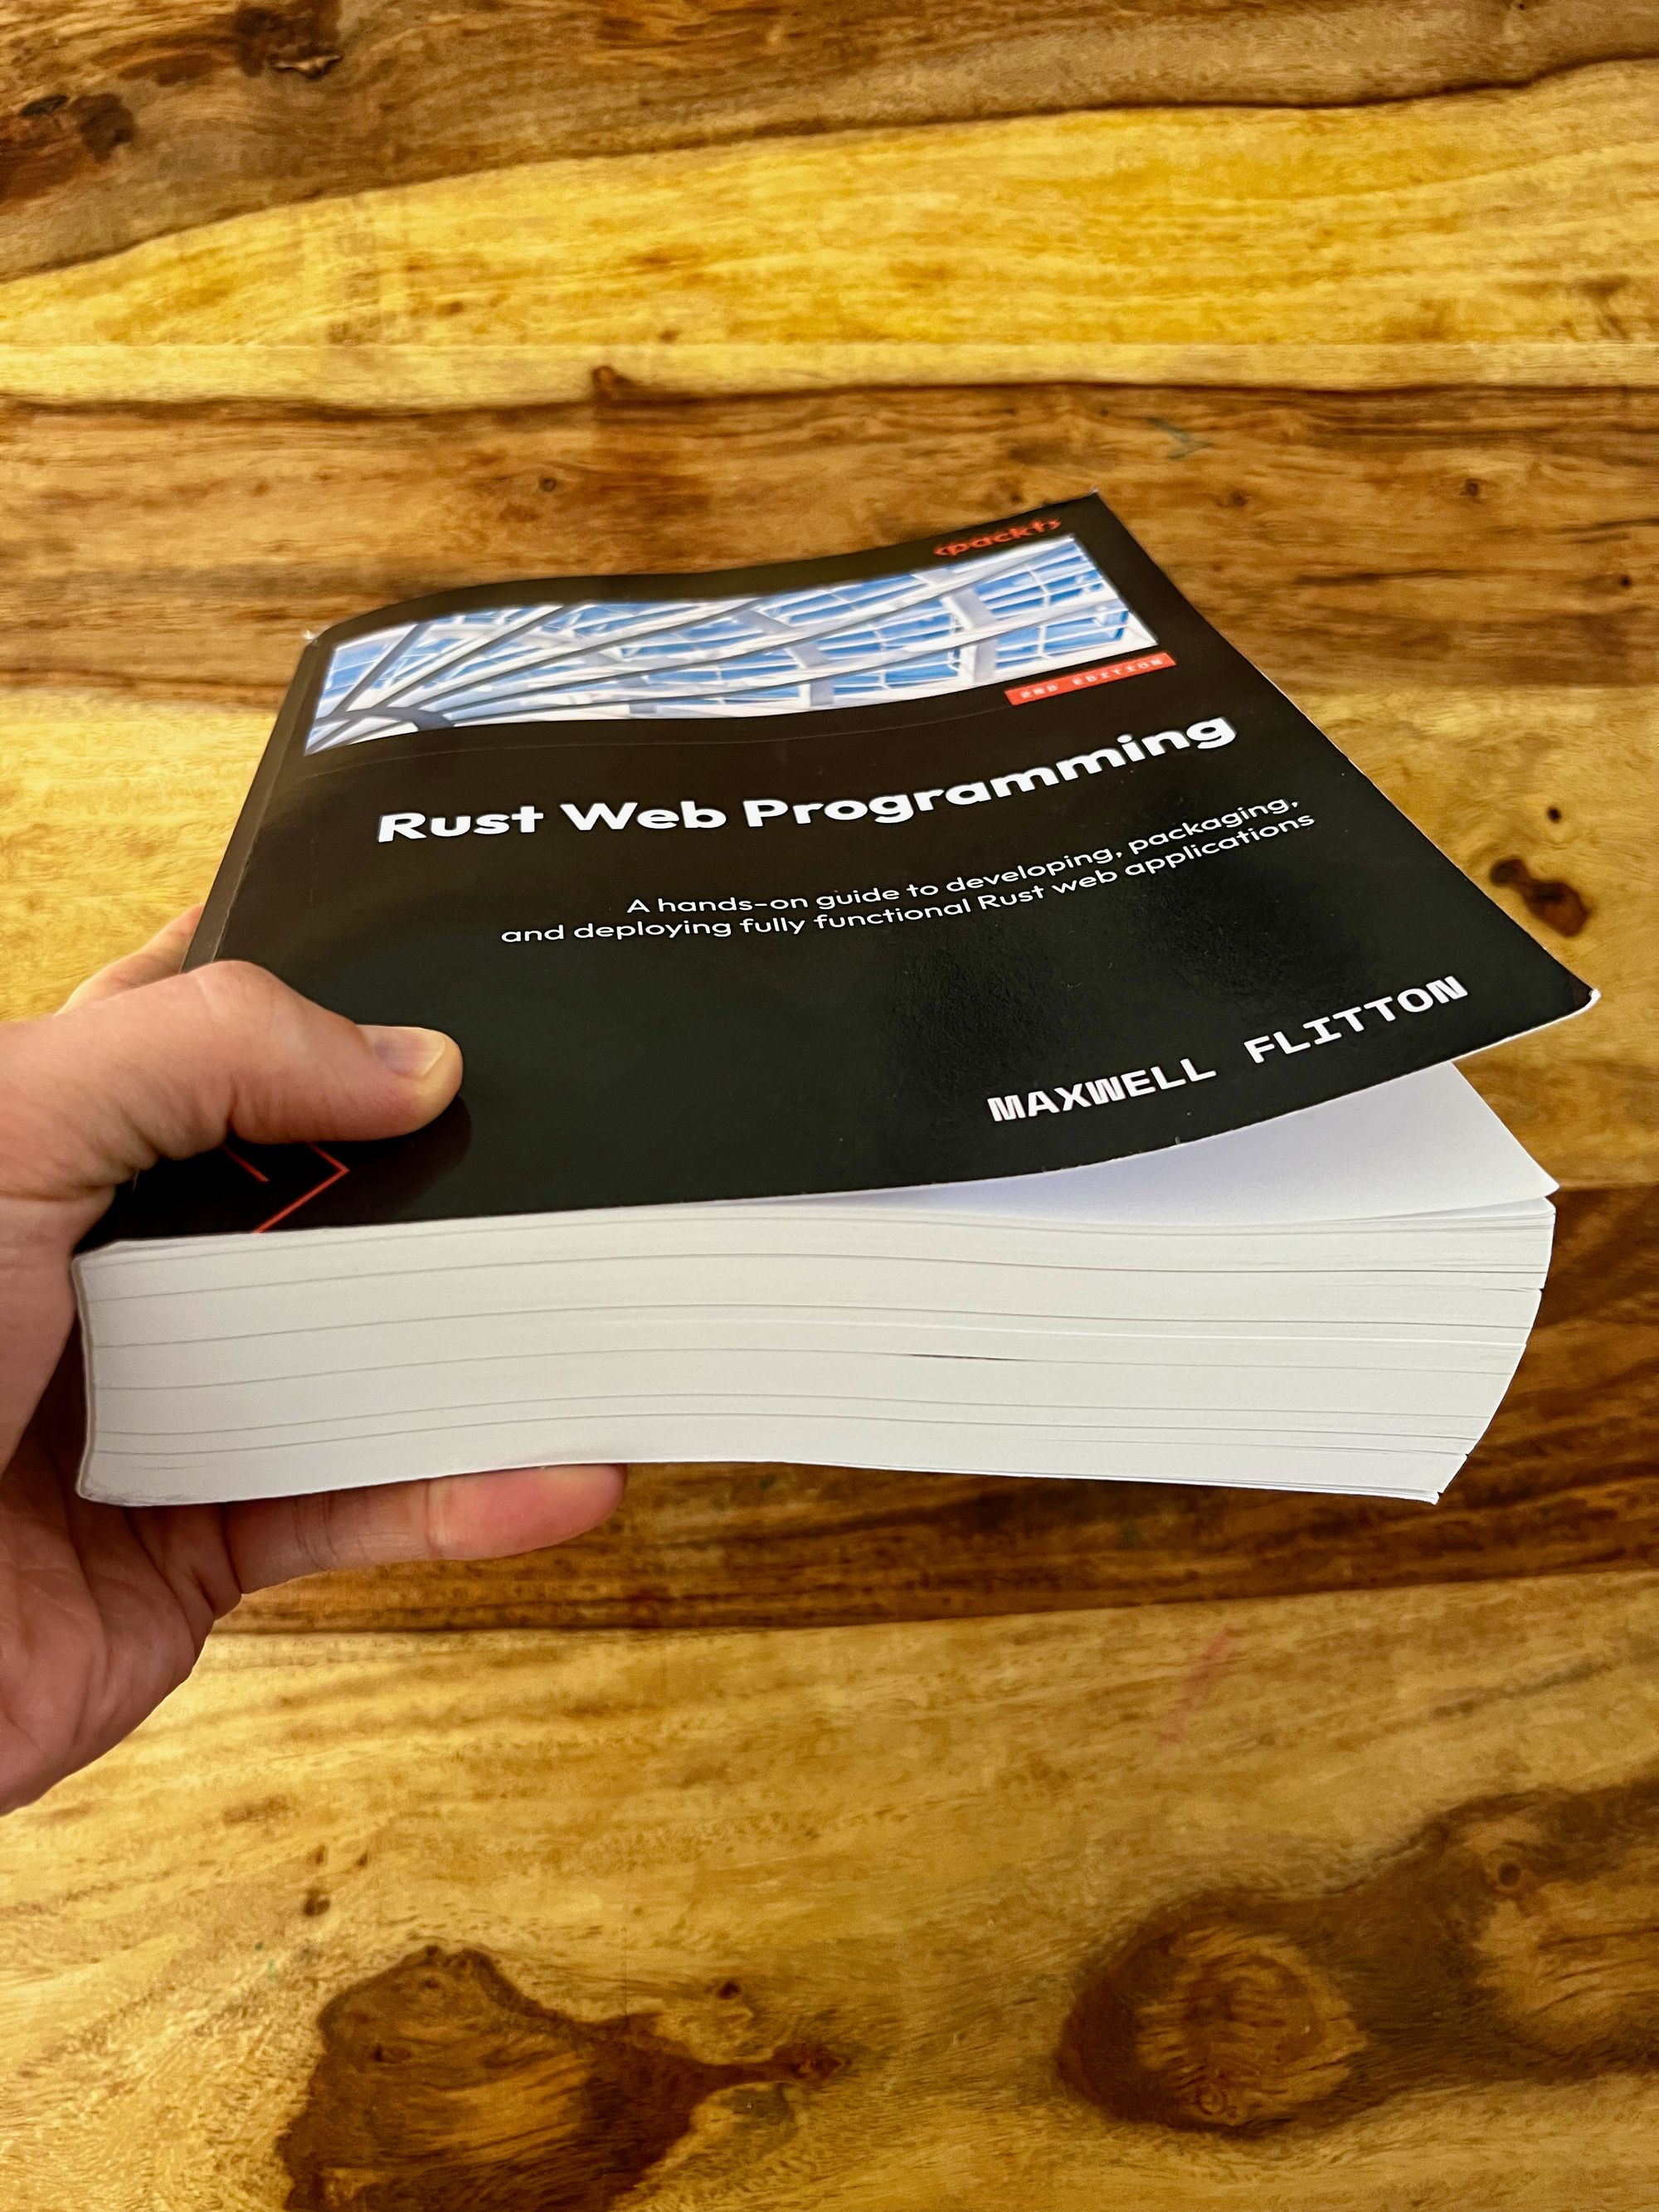 "Rust Web Programming" by Maxwell Flitton